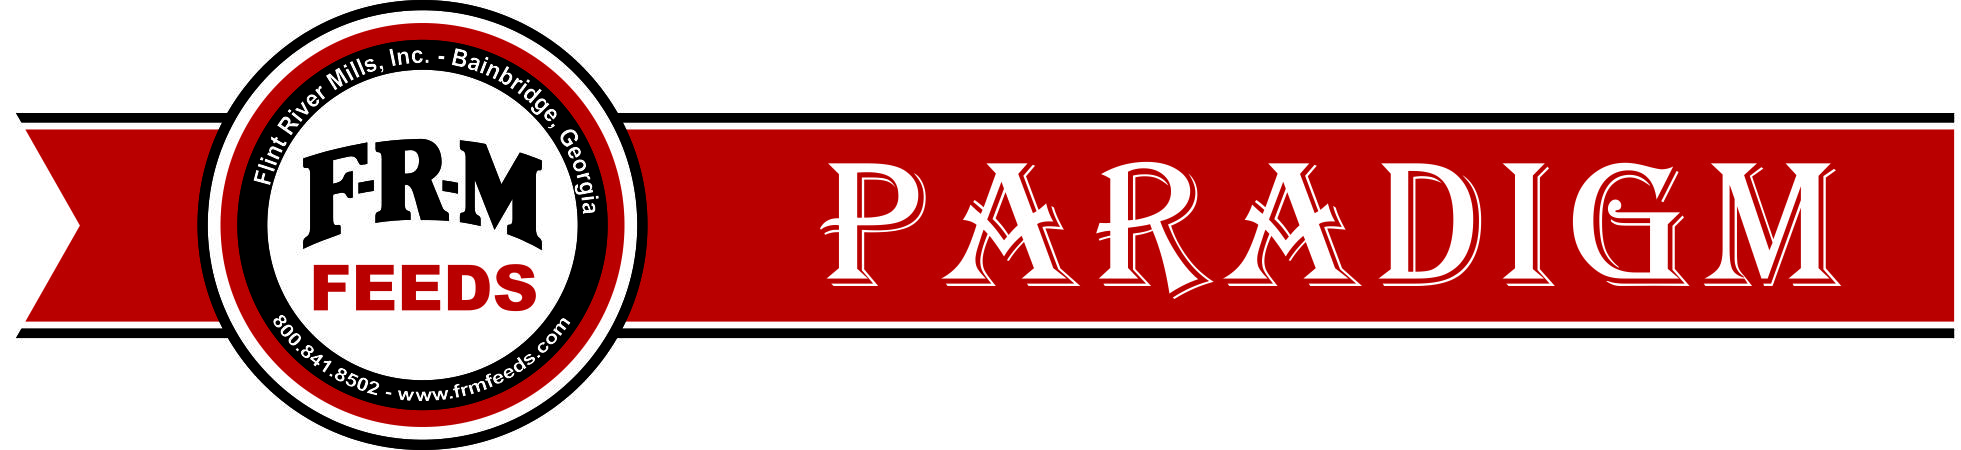 Paradigm Logo - Horizontal